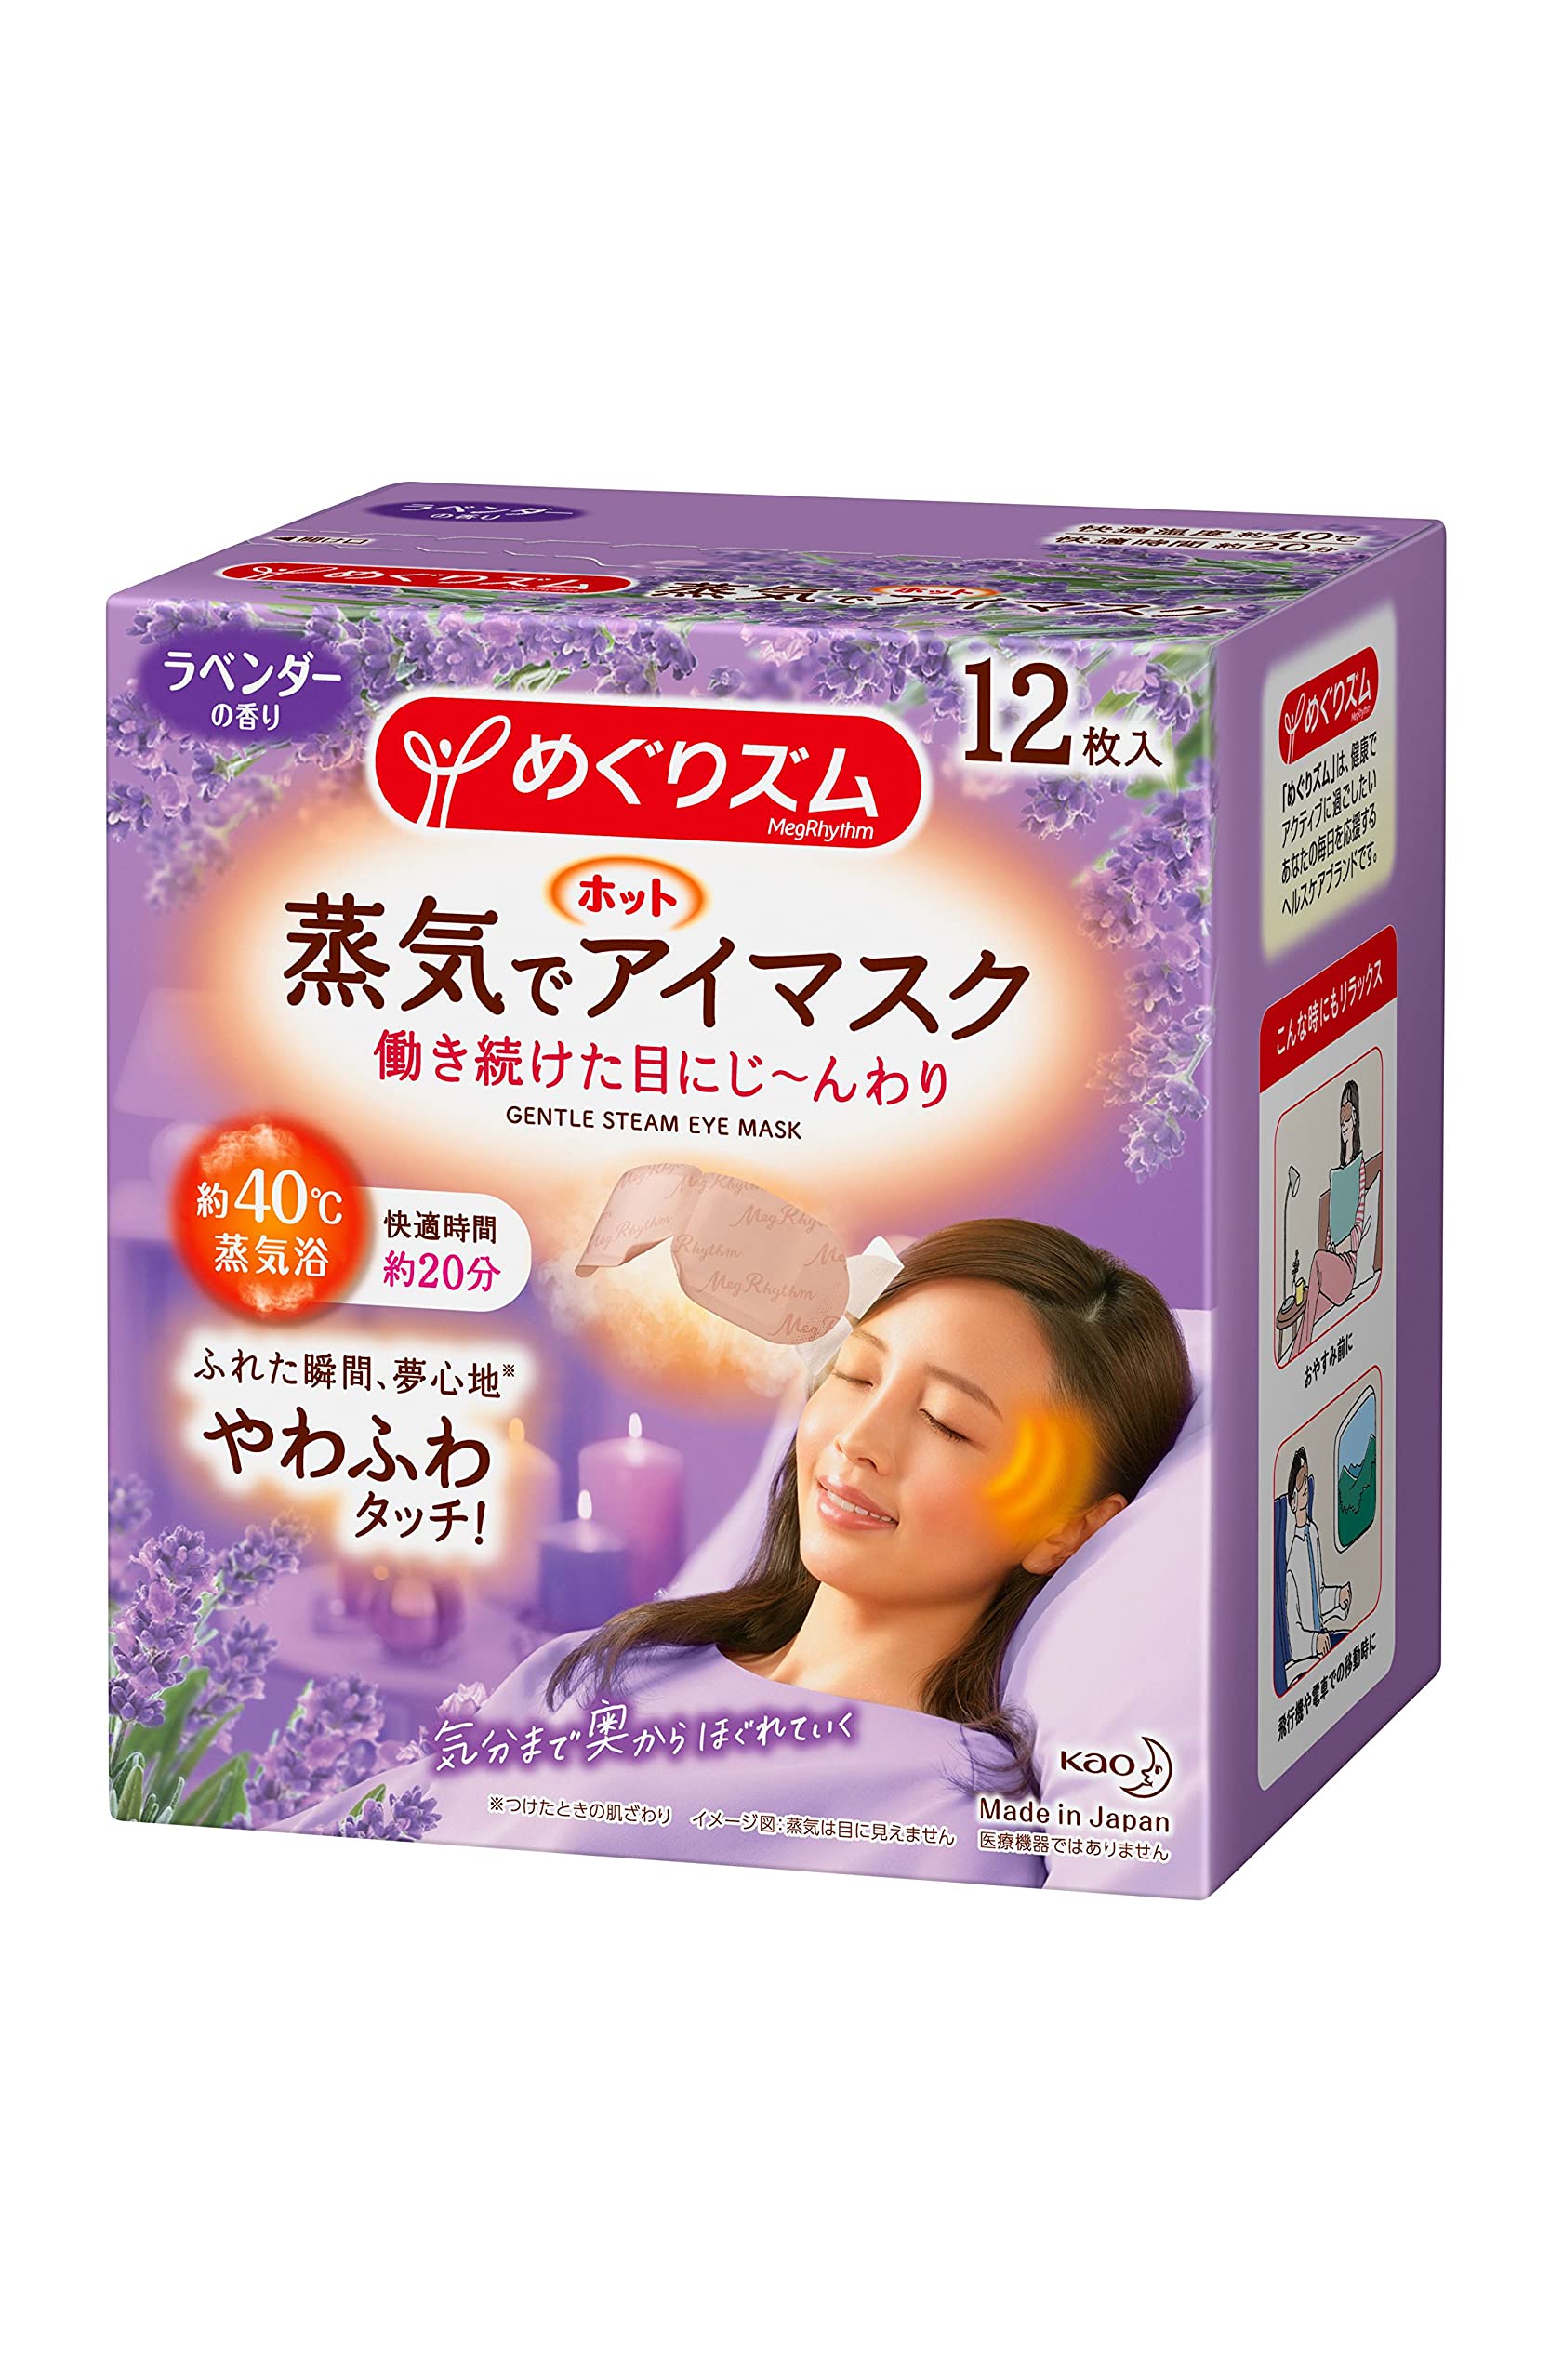 Latest Version Kao MEGURISM Health Care Steam Warm Eye Mask,Made in Japan,Lavender 12 Sheets